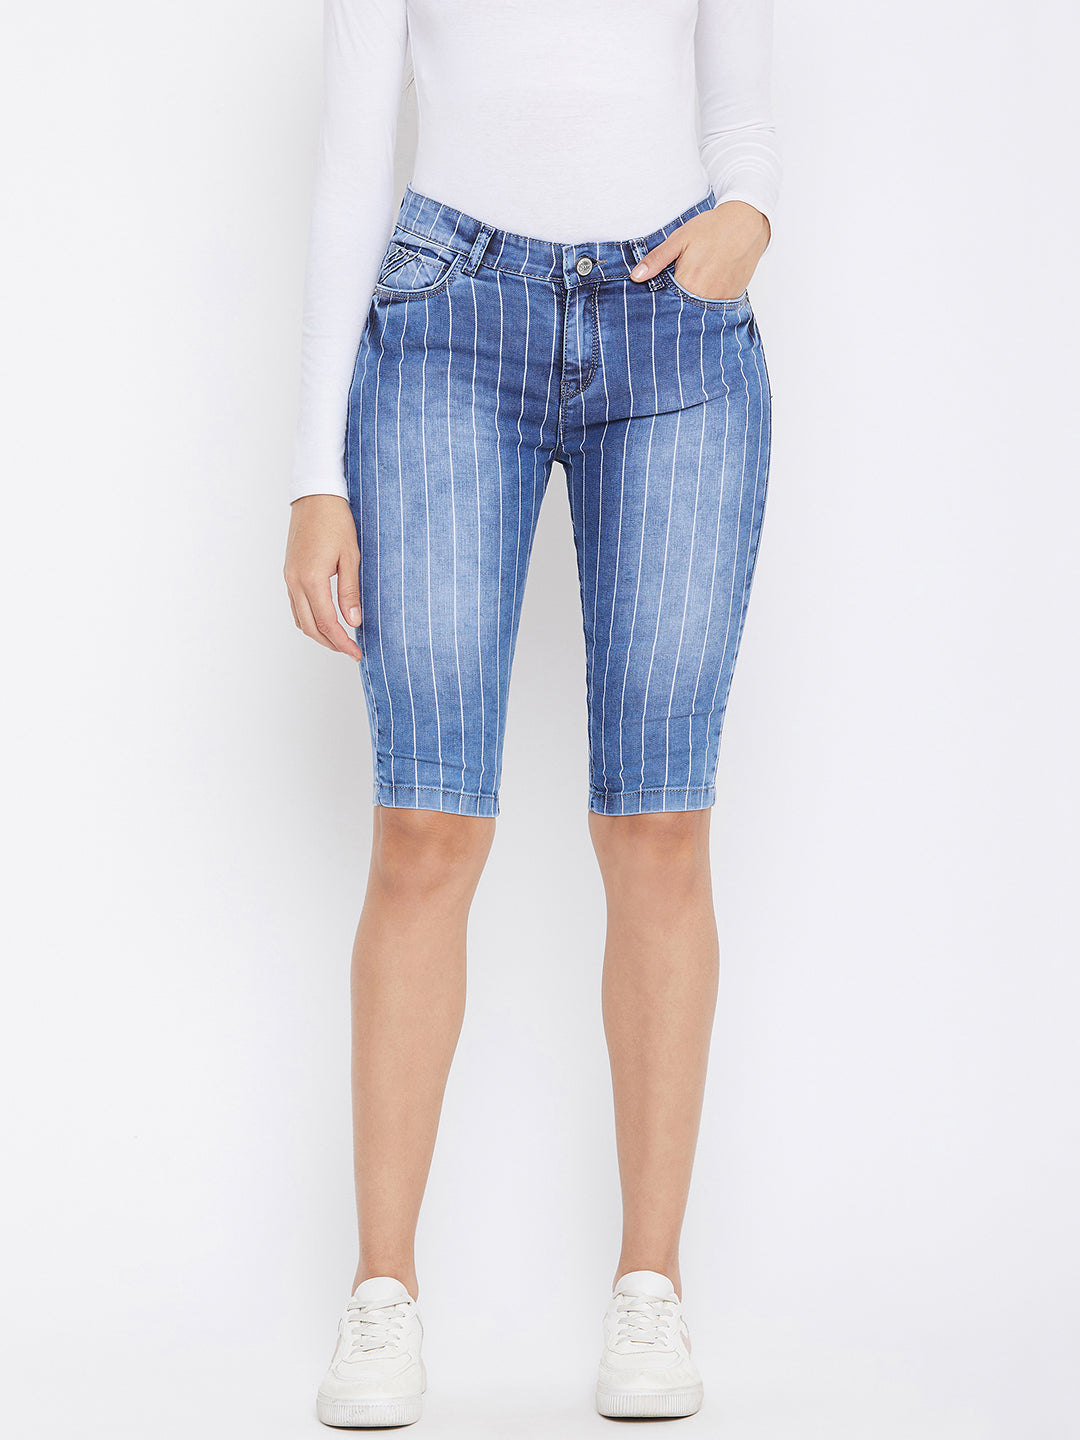 Striped Denim Shorts - Women Shorts